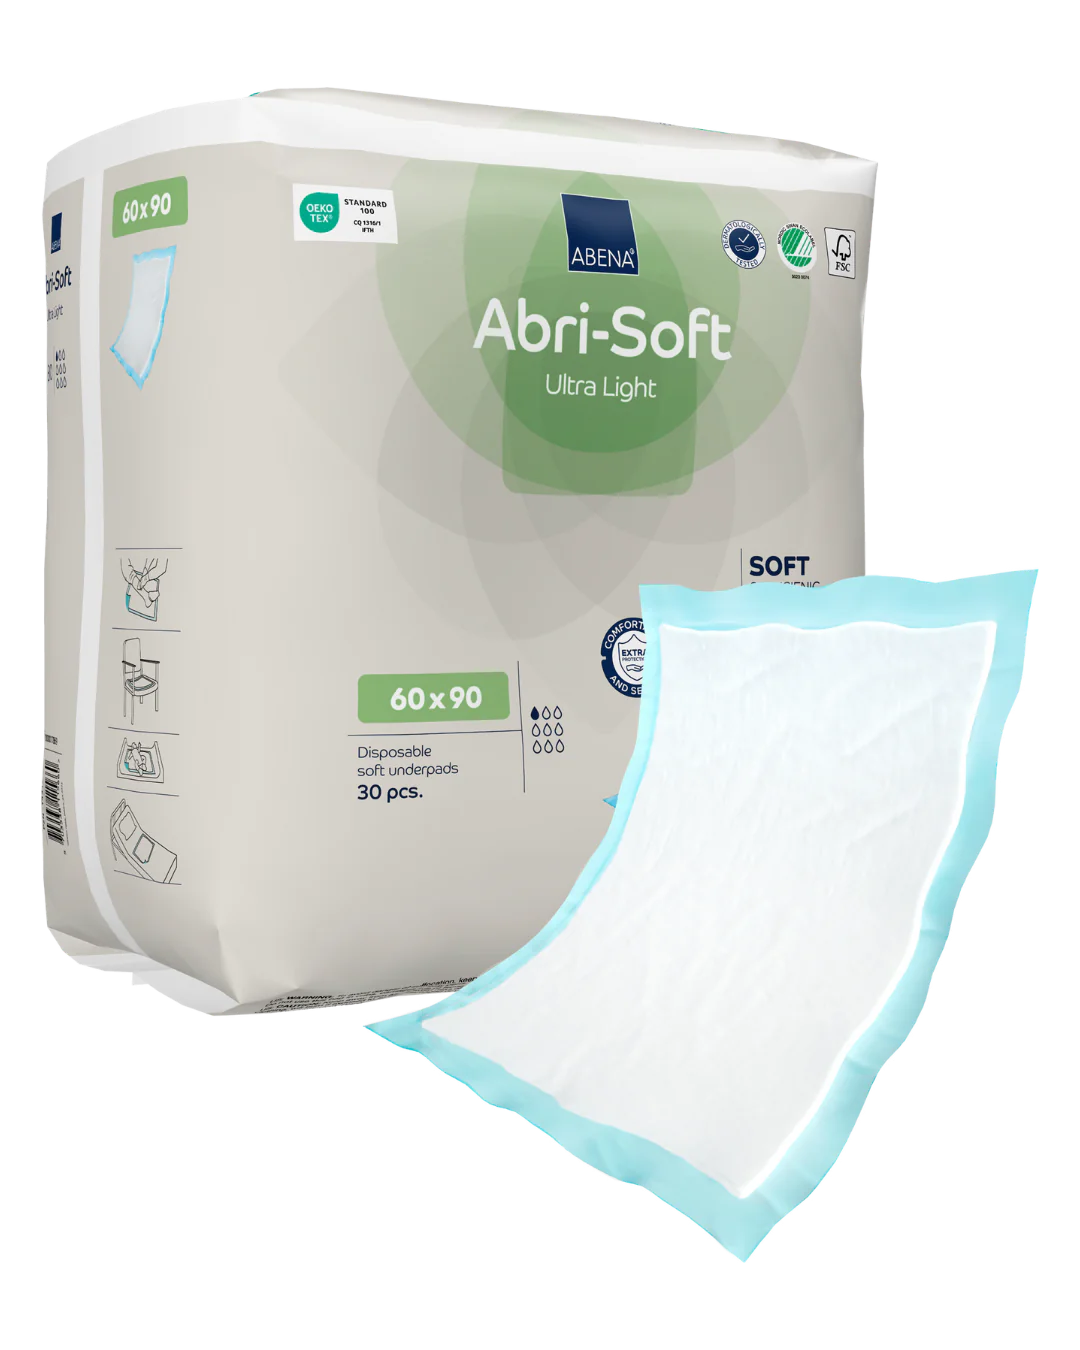 Abri-Soft Ultra Light disposable underpad - 60x90cm- 5660